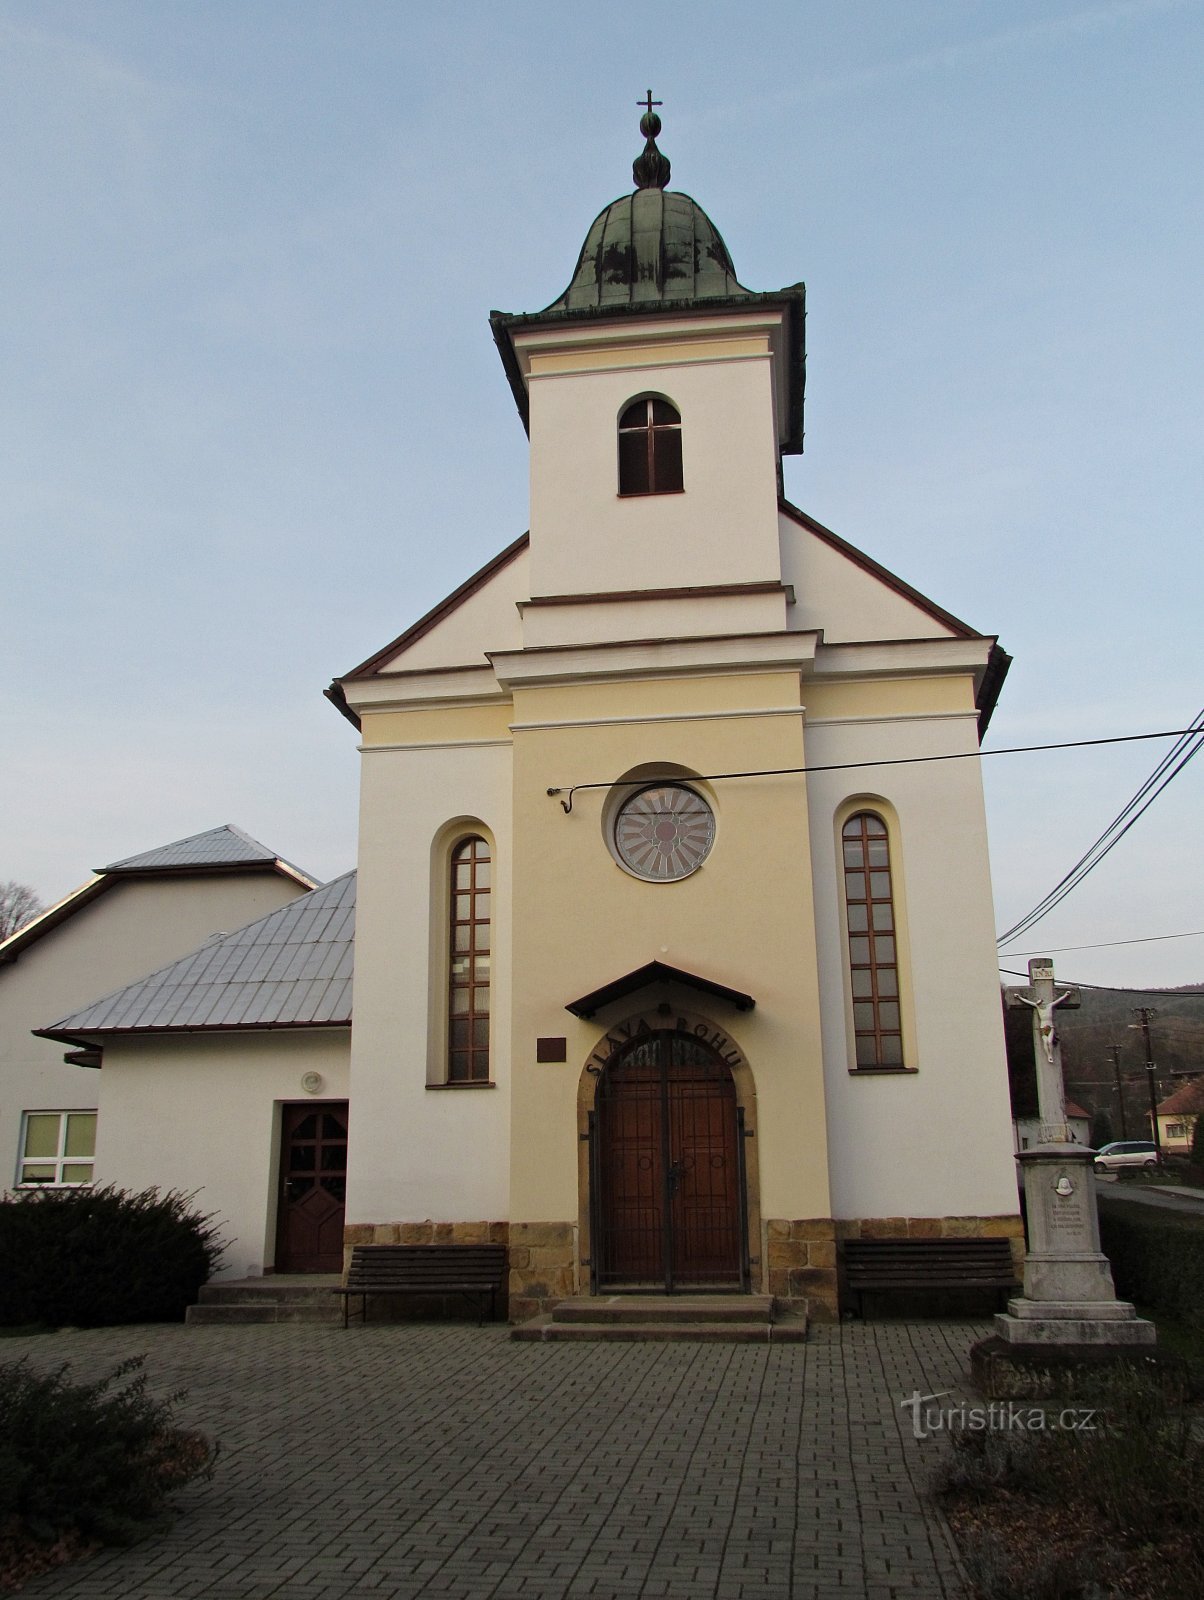 Hřivínův Újezd ​​​​- capela Sf. Chiril și Metodie